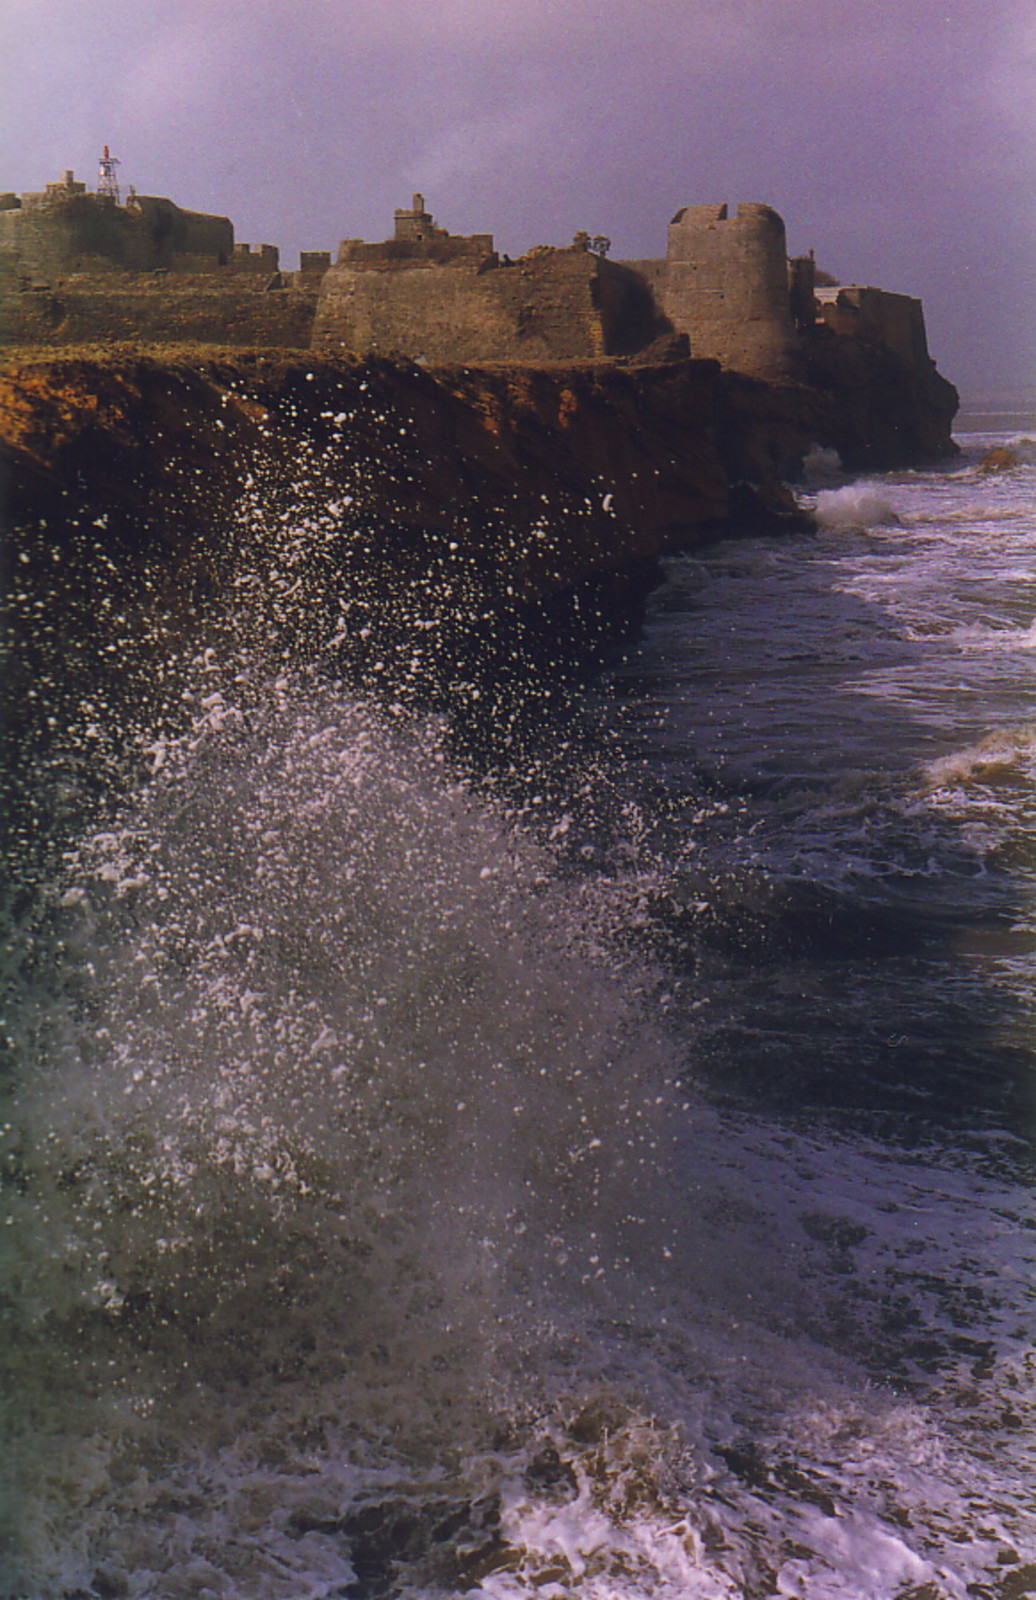 The Arabian Sea battering the old fortress at Diu